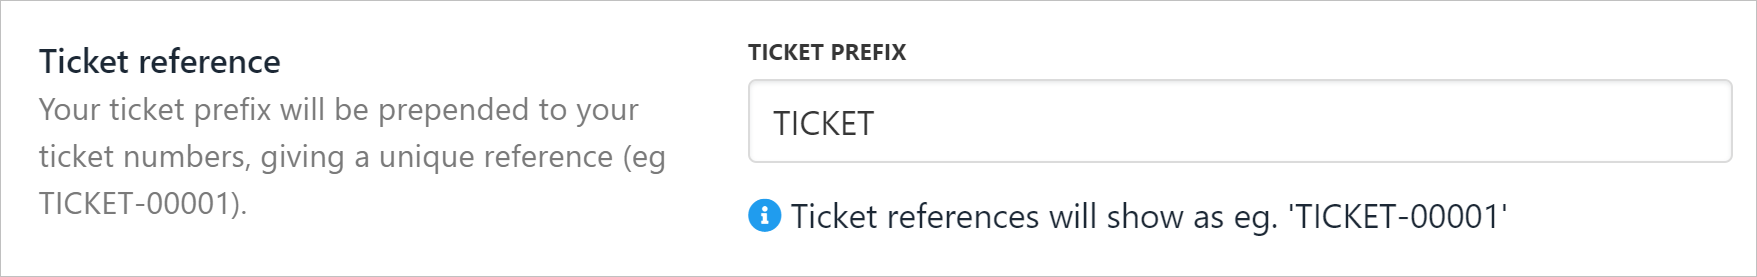 Ticket prefix